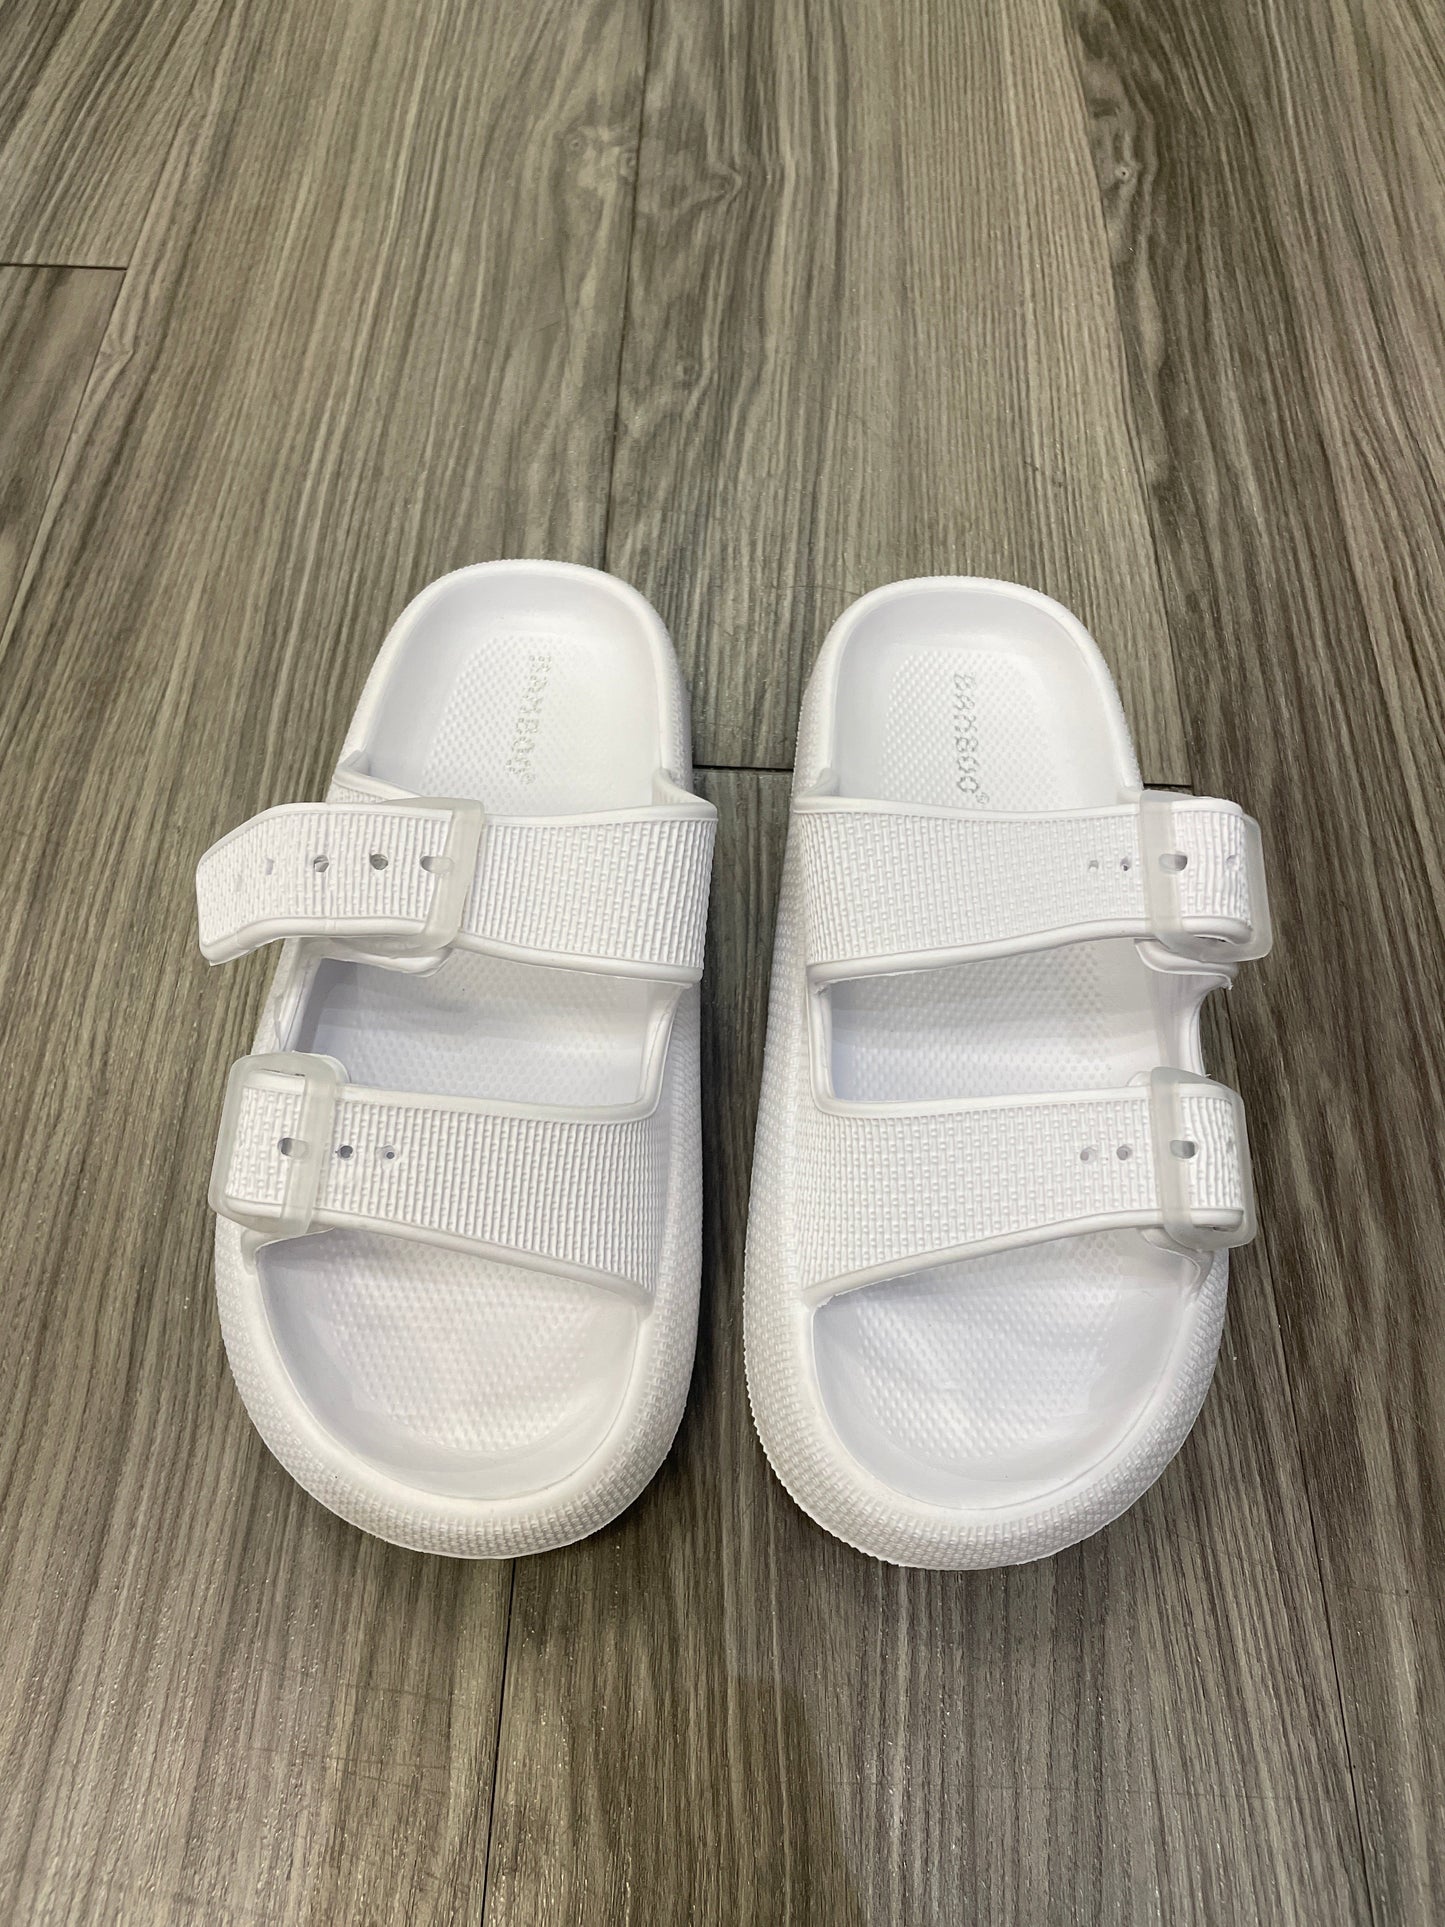 White Sandals Flip Flops Bamboo, Size 7